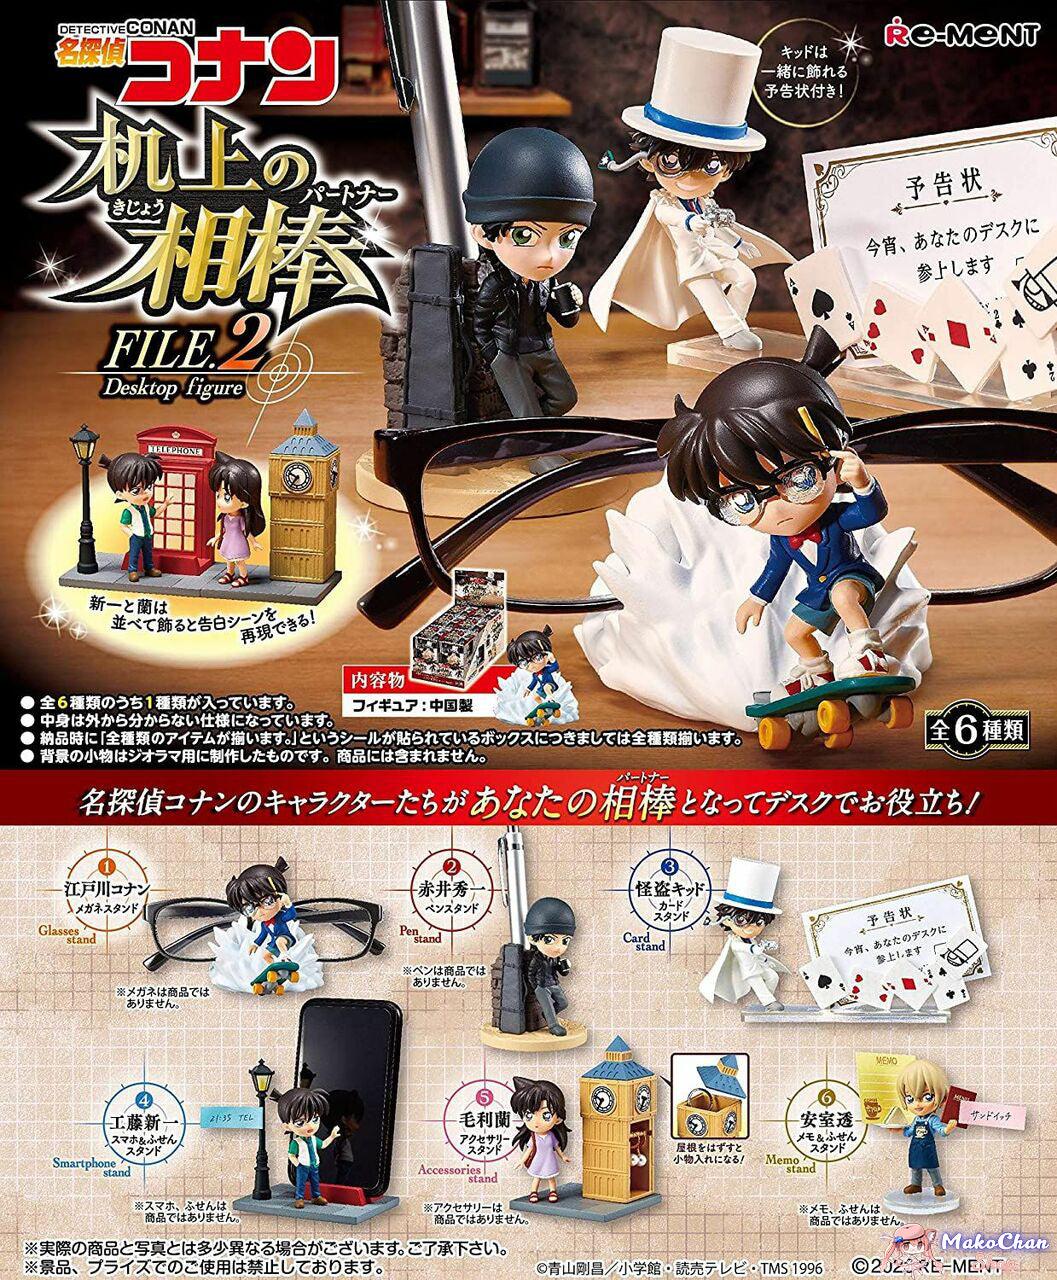 Re-ment Detective Conan Desktop Figure File .2 Makochan.store